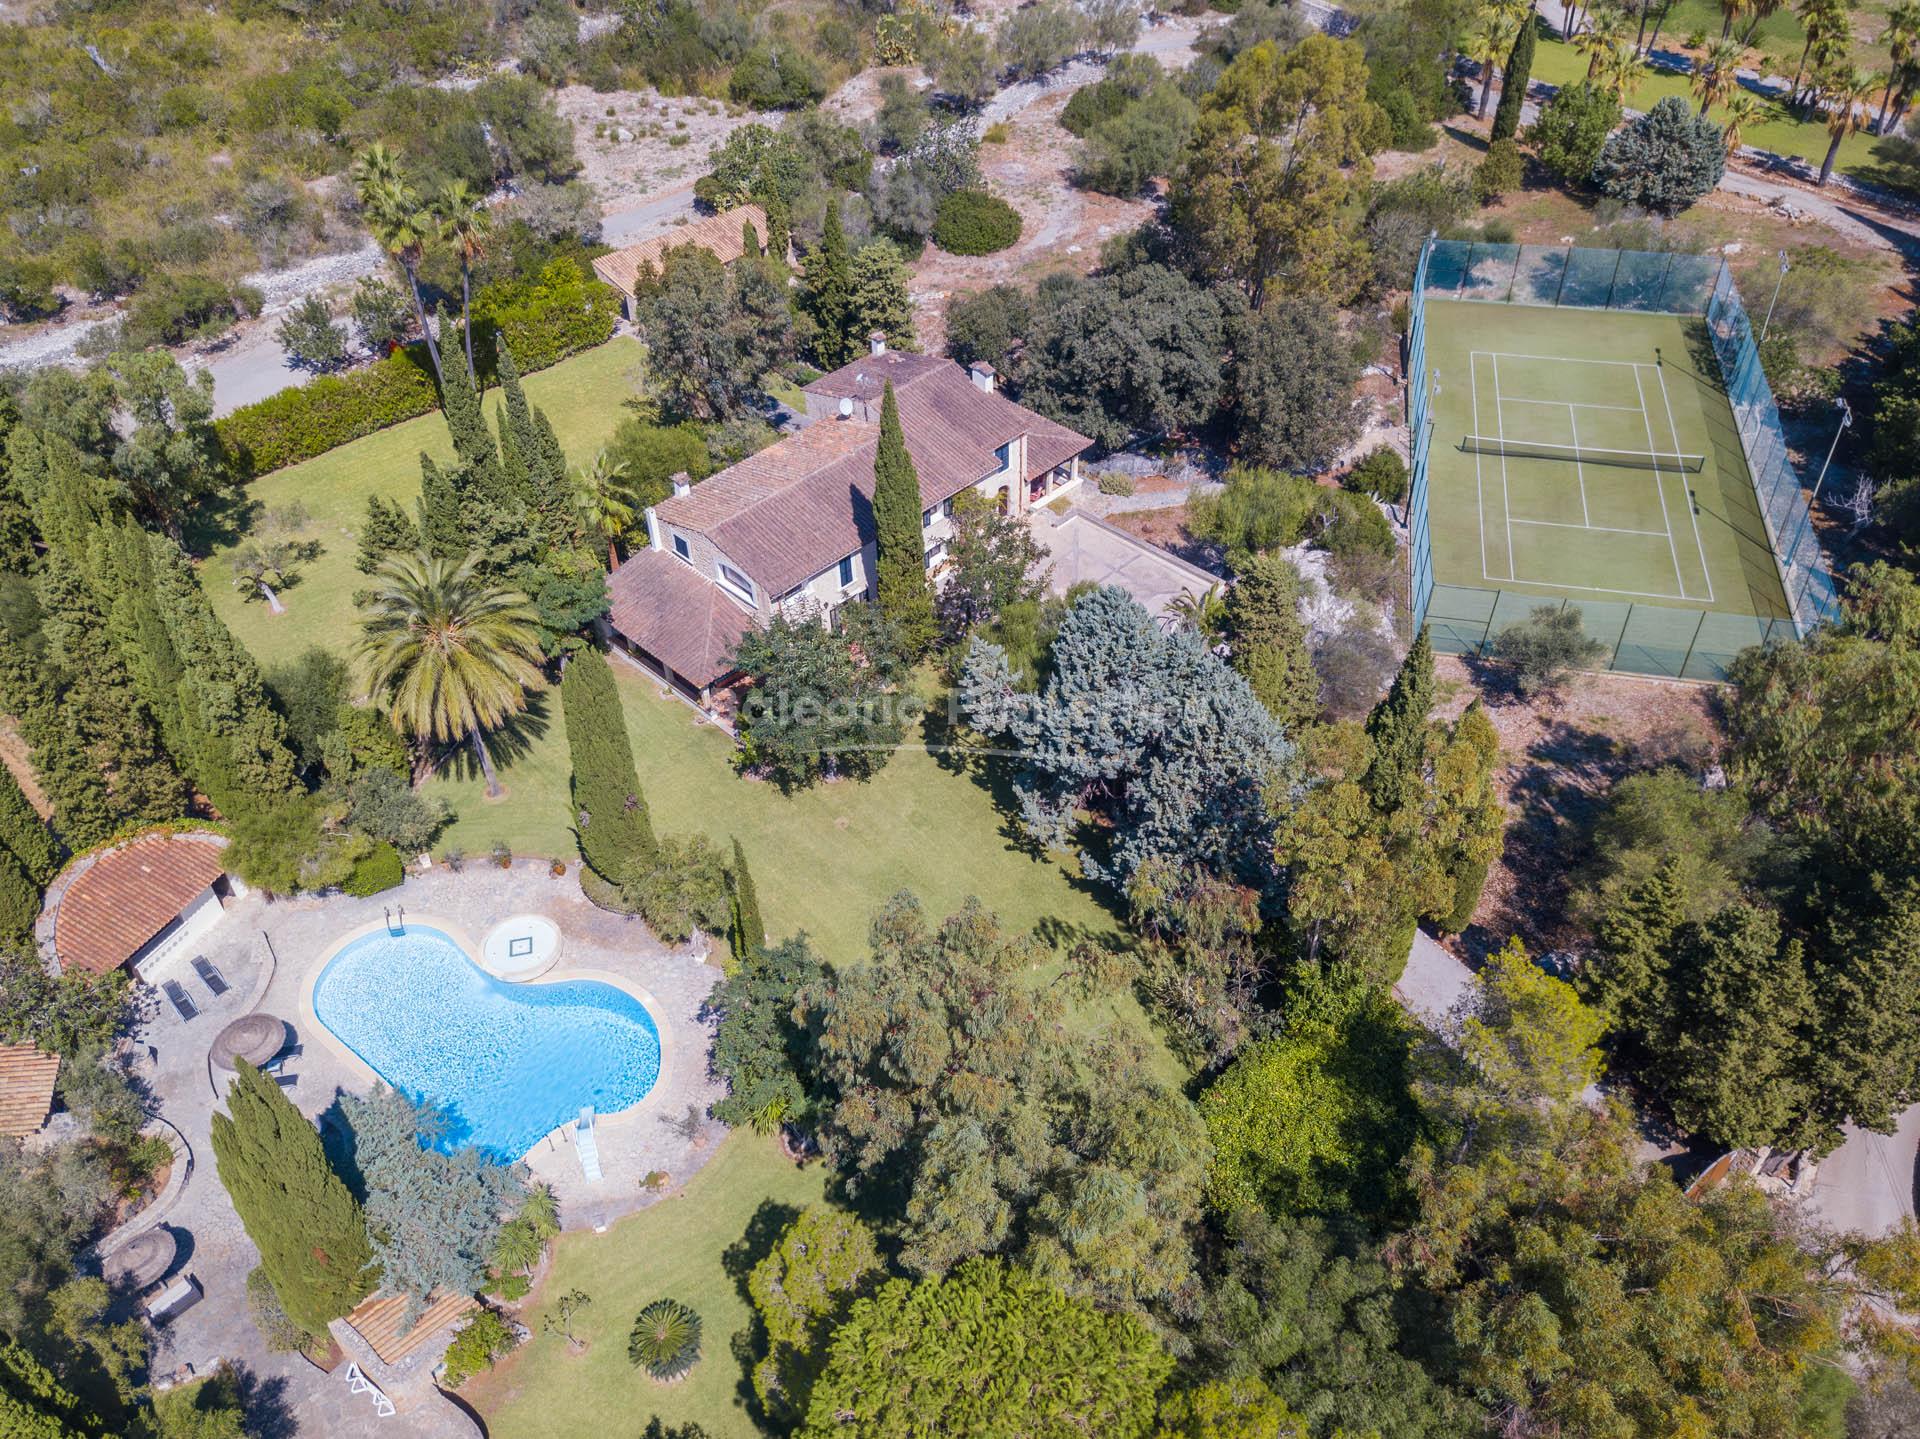 Extraordinaria casa de campo con pista de tenis en venta en Pollensa, Mallorca